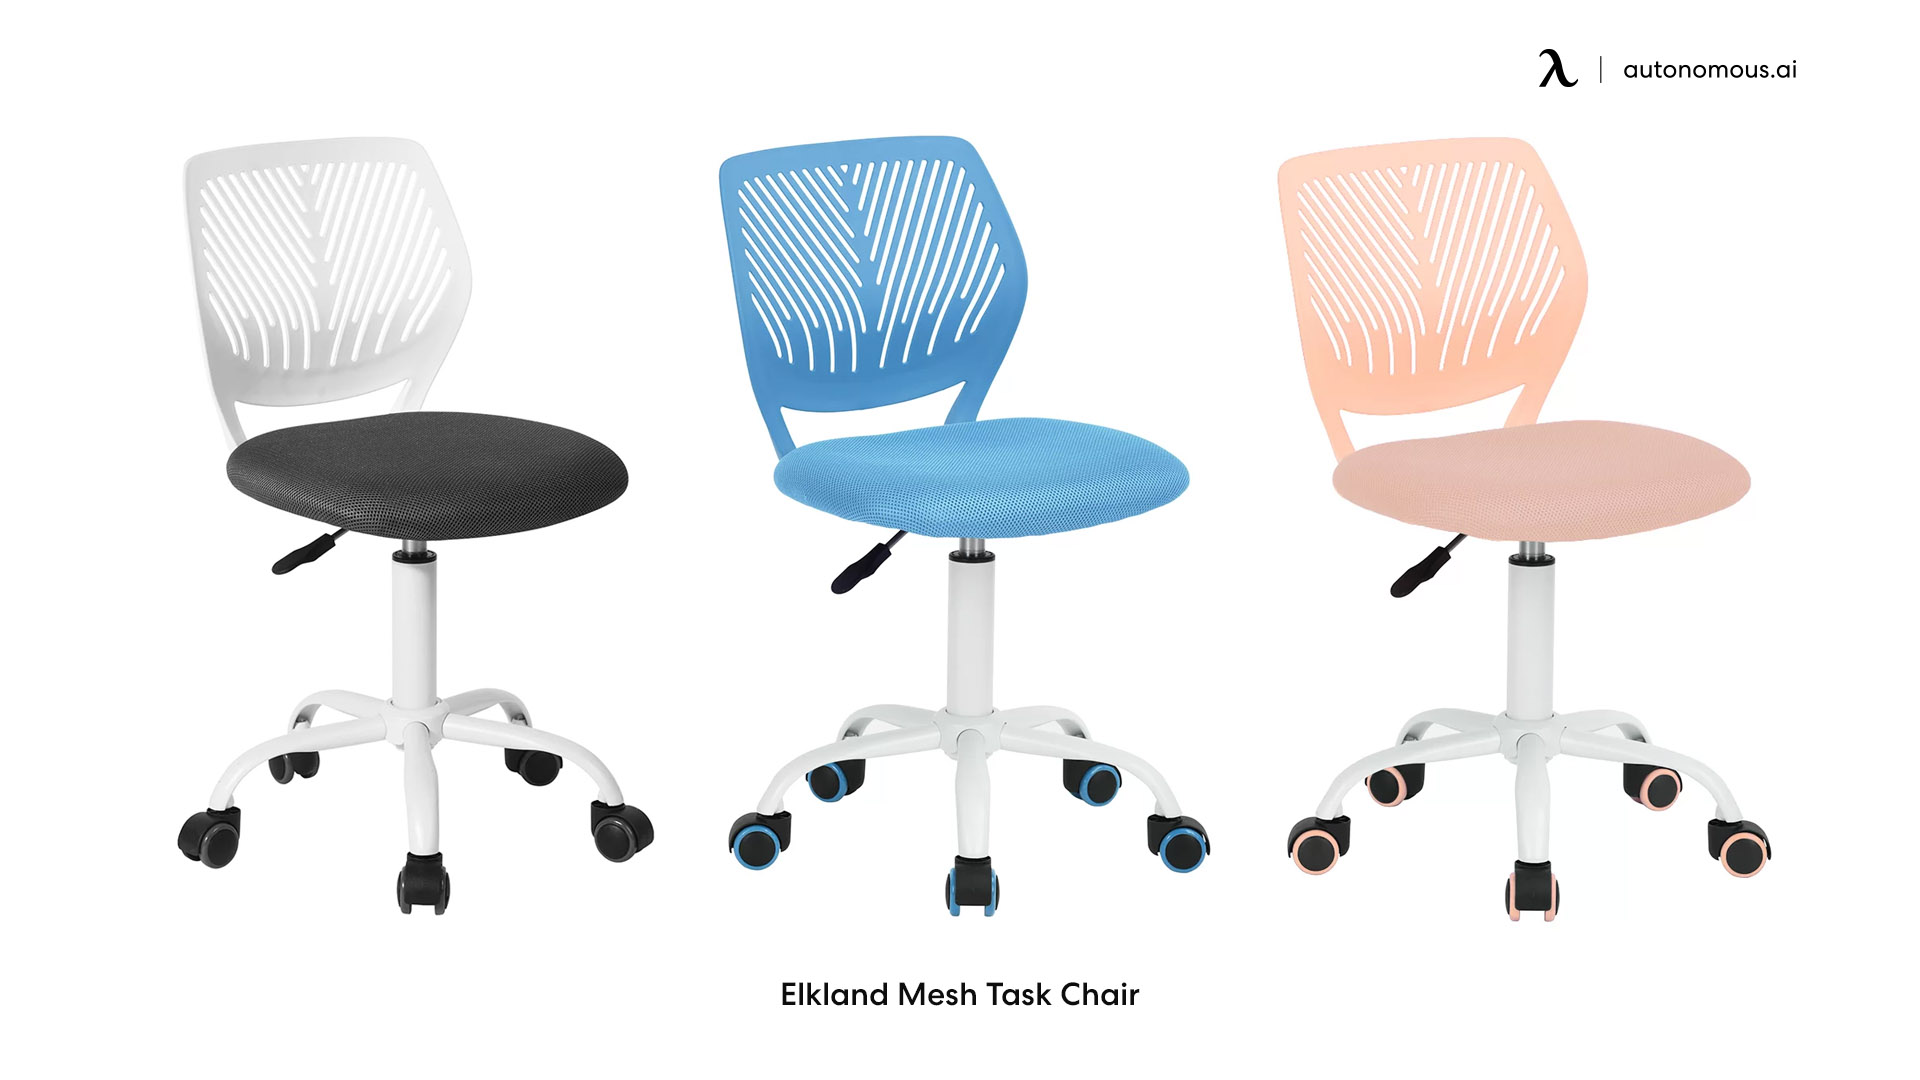 Elkland Mesh Task Chair